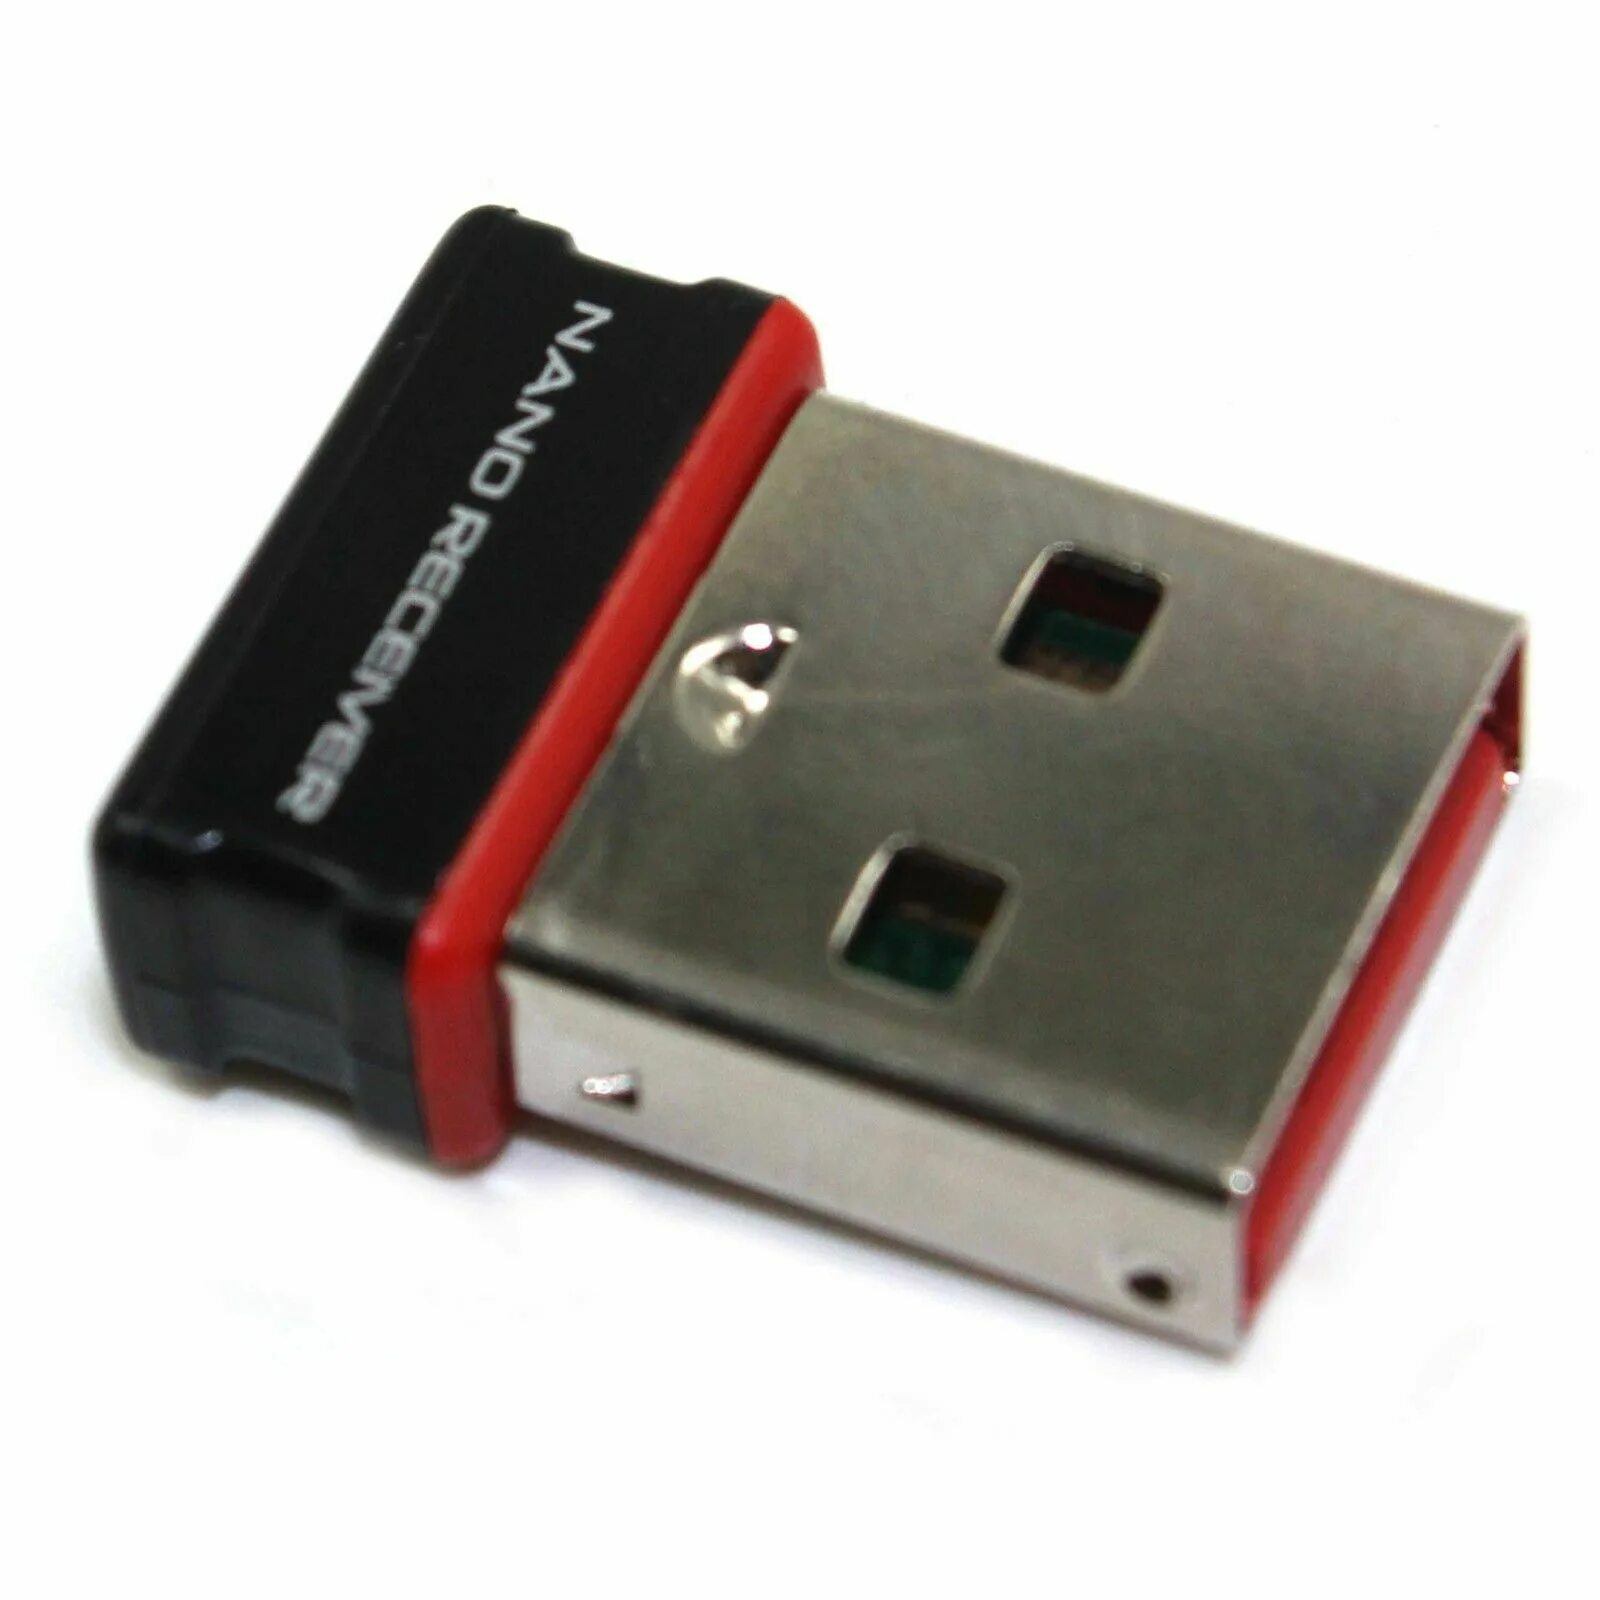 Usb logitech купить. Logitech c-u0010 Nano Receiver. Logitech c-u0010 USB Wireless Receiver. USB-приемник Logitech USB Unifying Receiver. Logitech USB Receiver mk320.